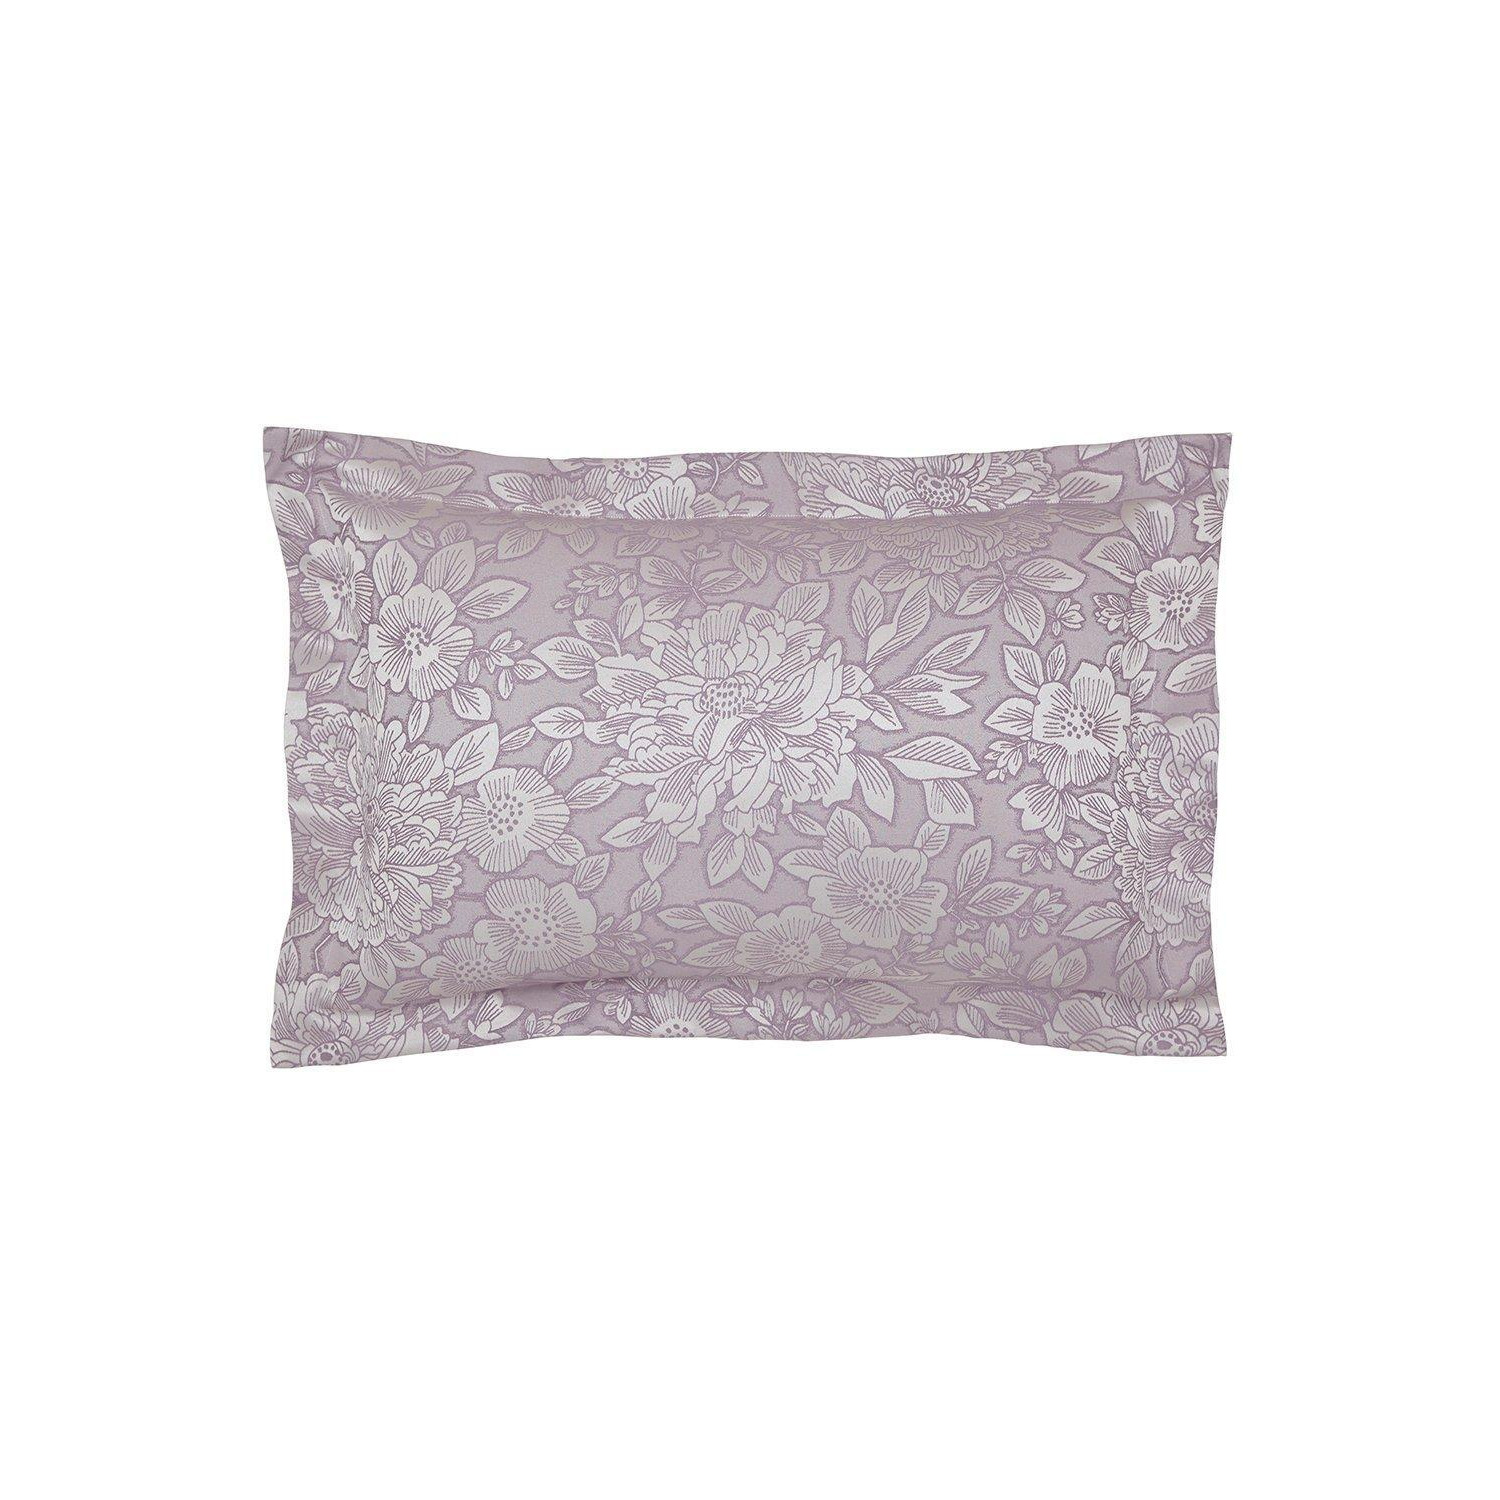 Avery Jacquard' Oxford Pillowcase - image 1